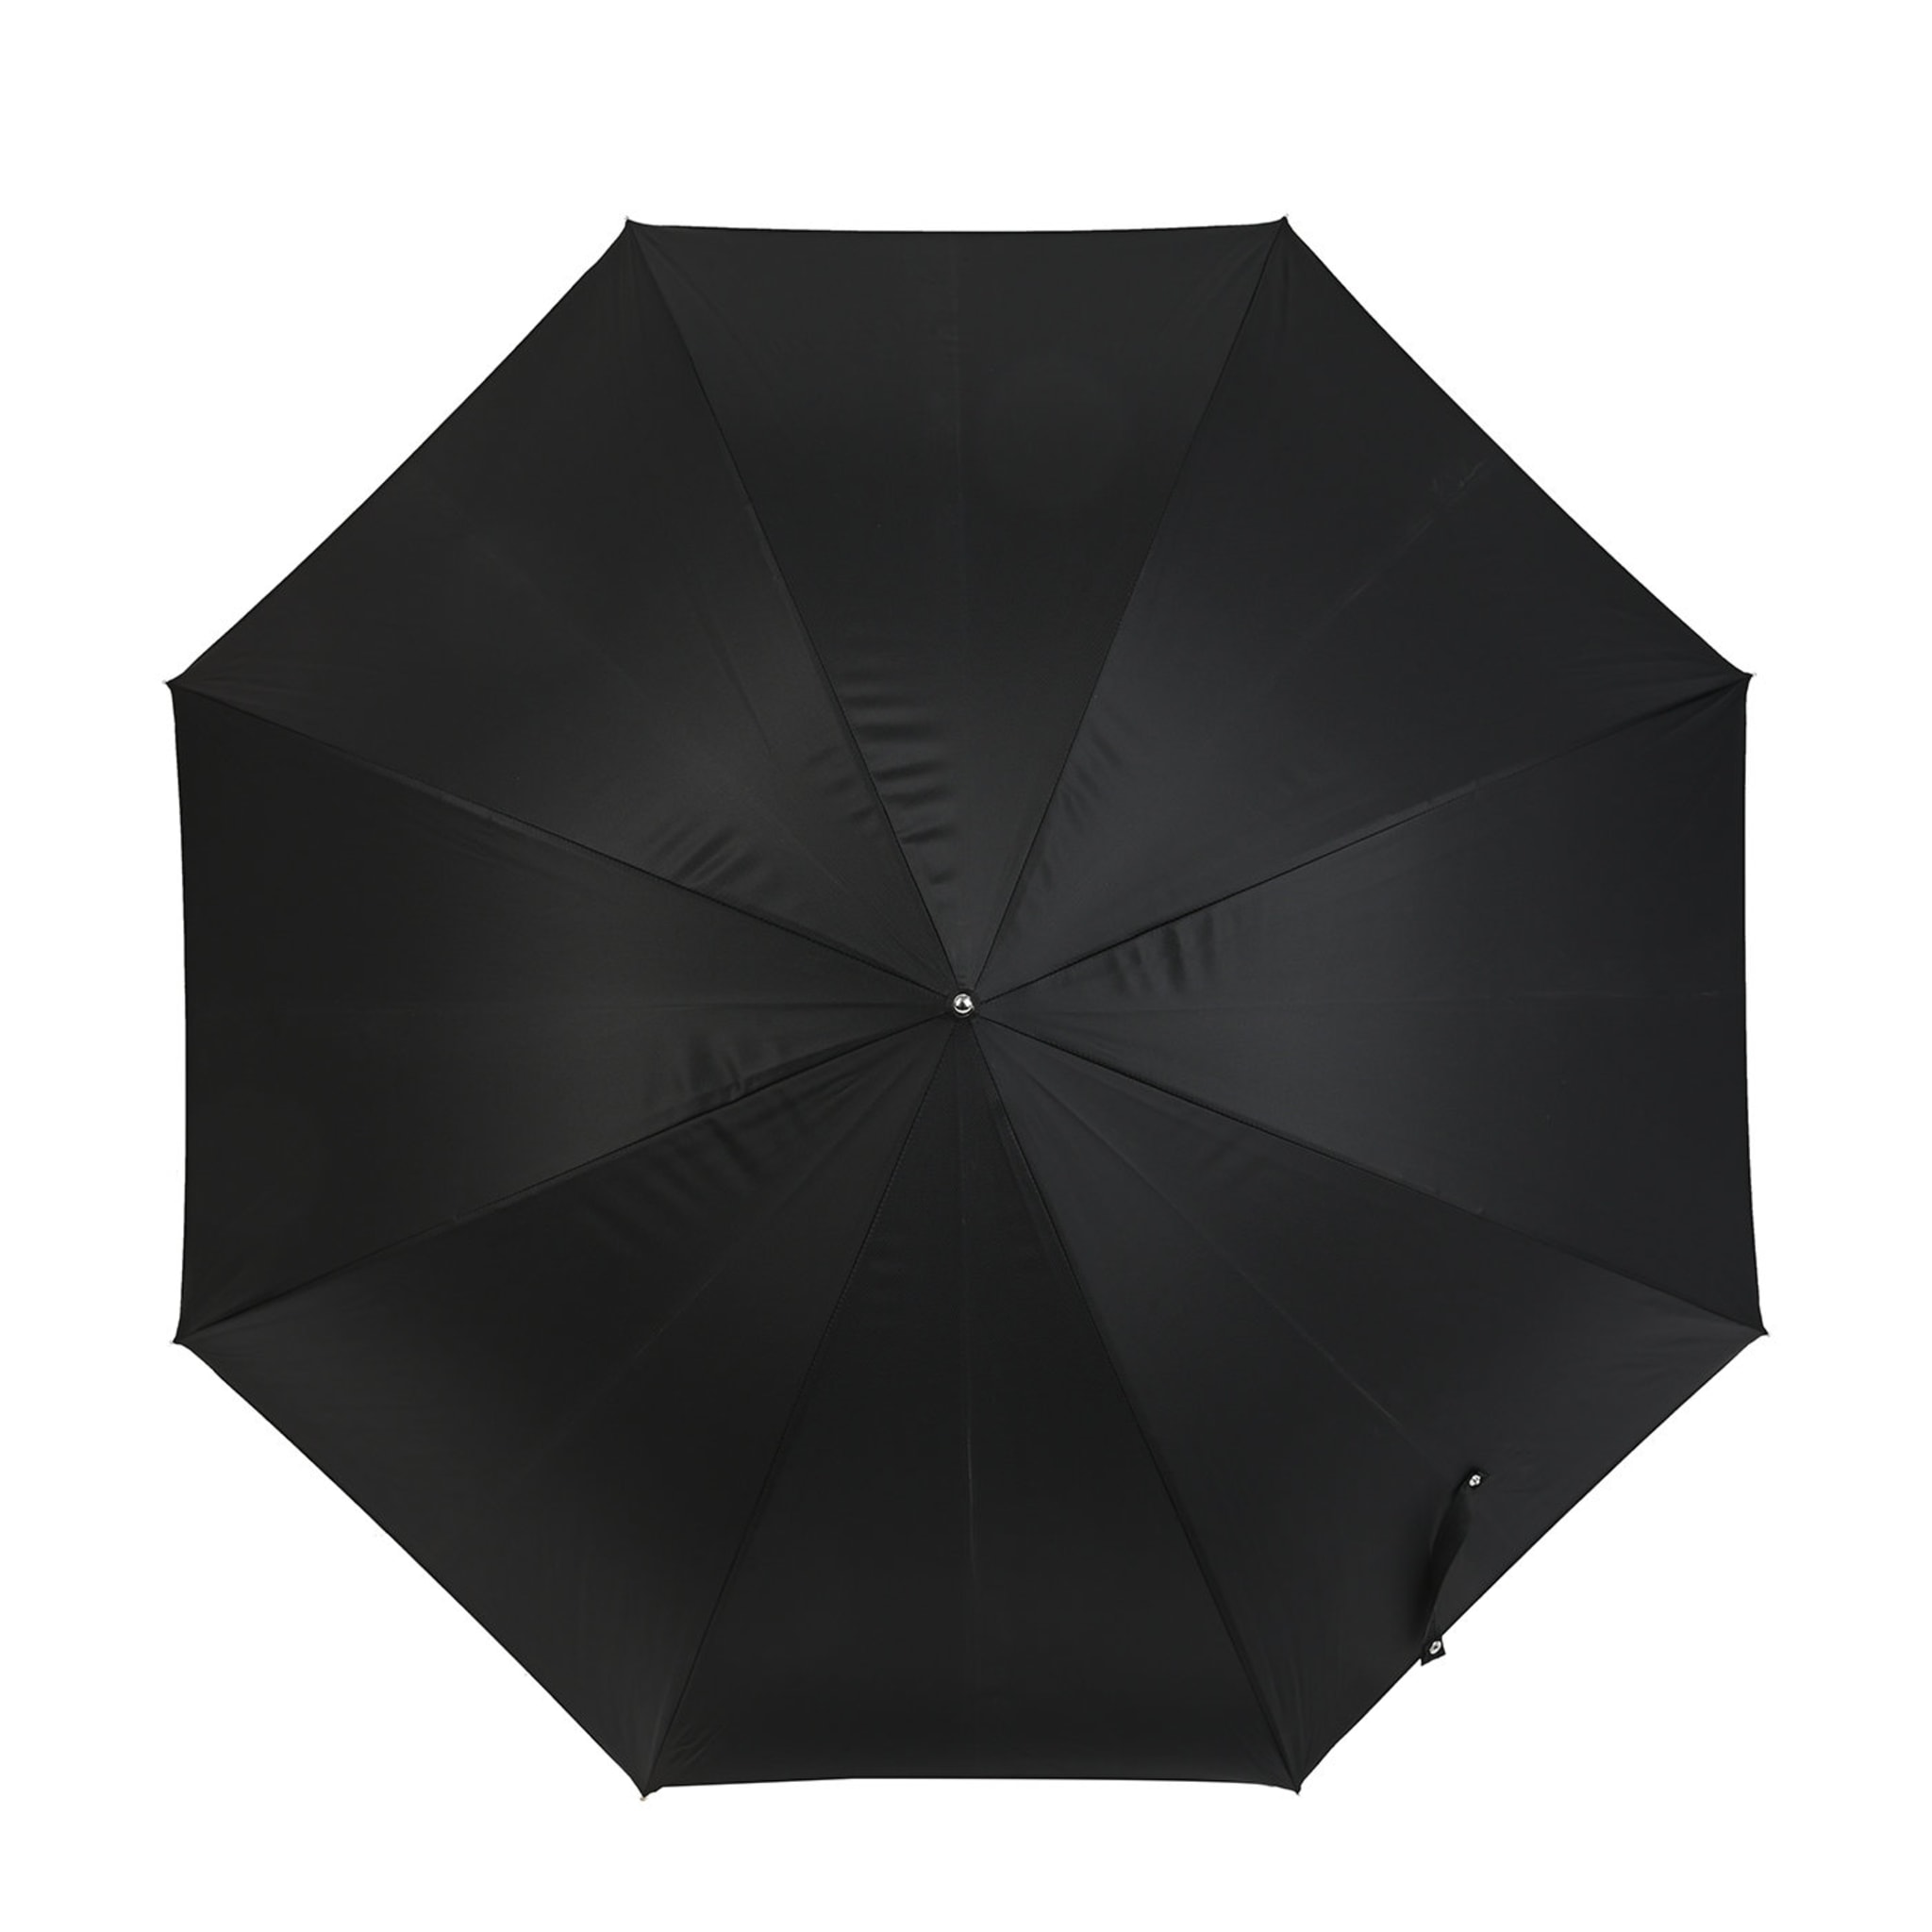 Black Honeycomb Umbrella with Horse Handle - Alternative view 1